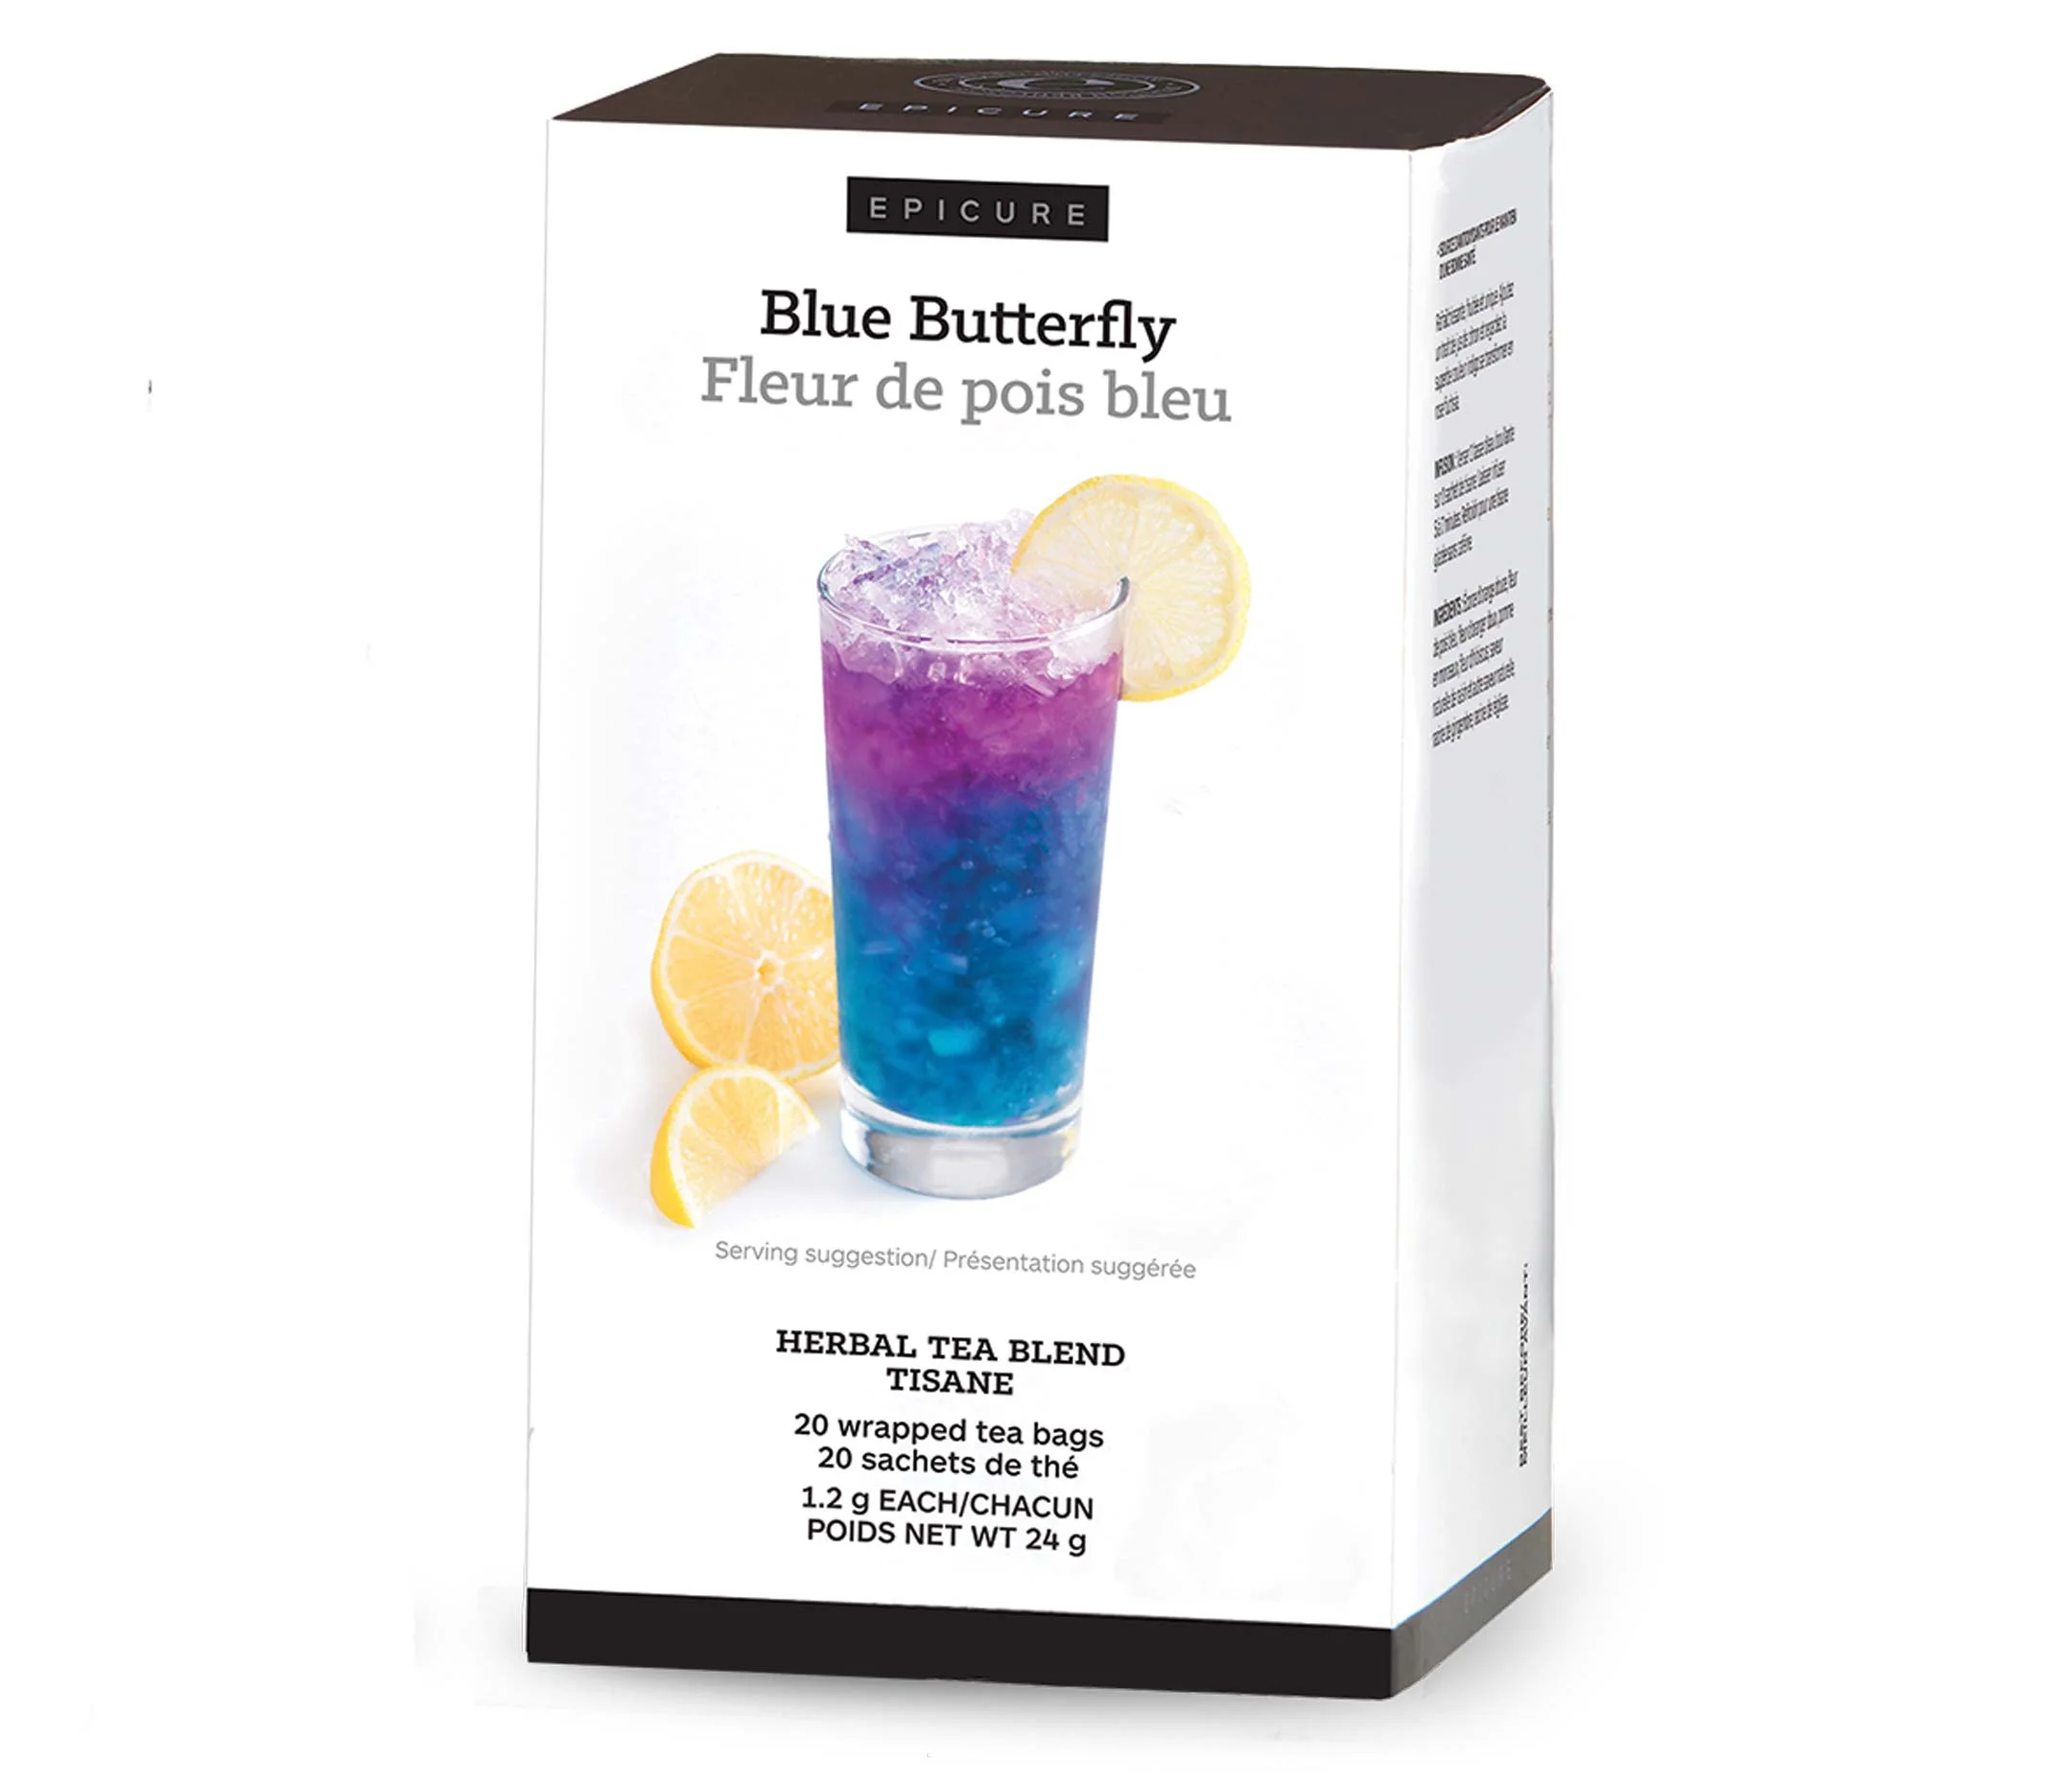 Blue Butterfly Herbal Tea Blend